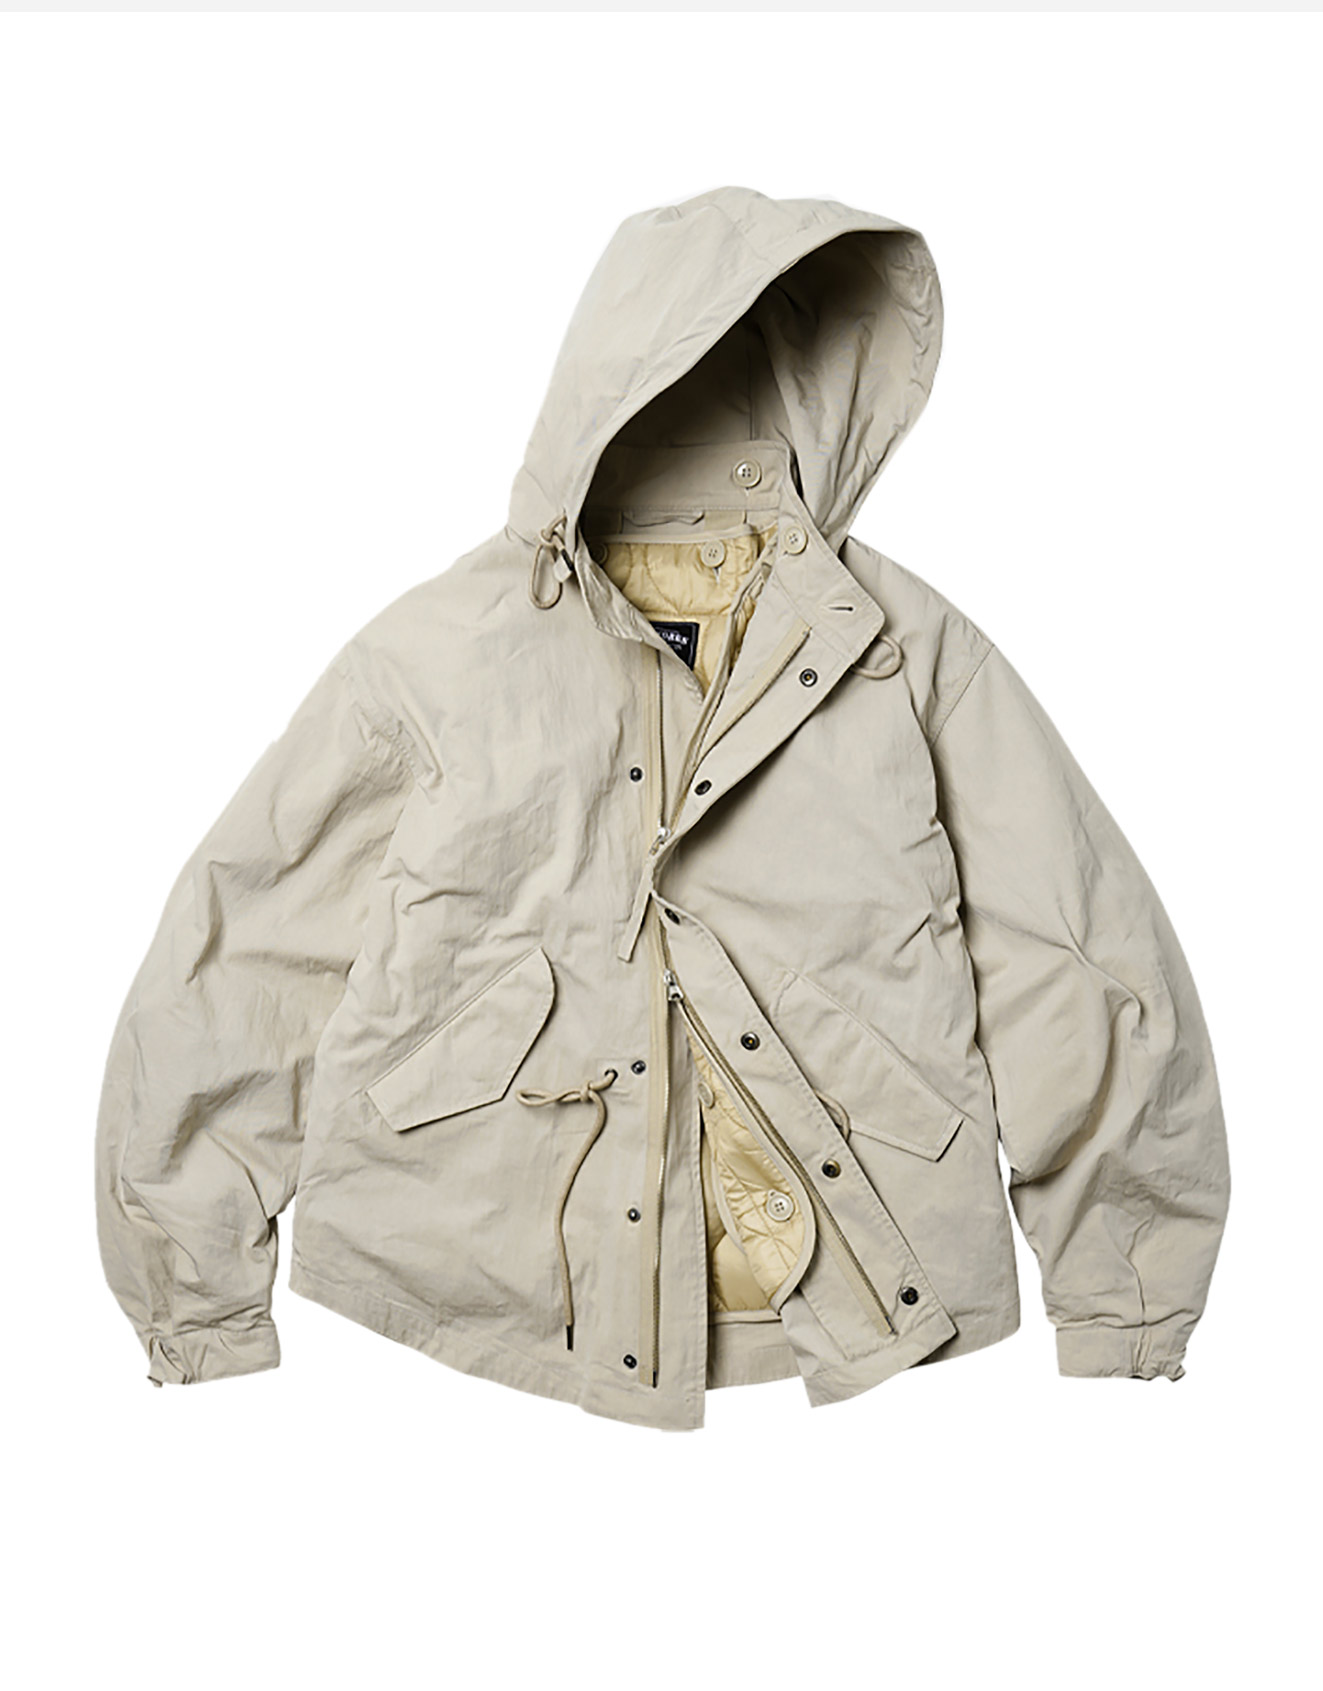 FRIZMWORKS – Oscar fishtail jacket 003